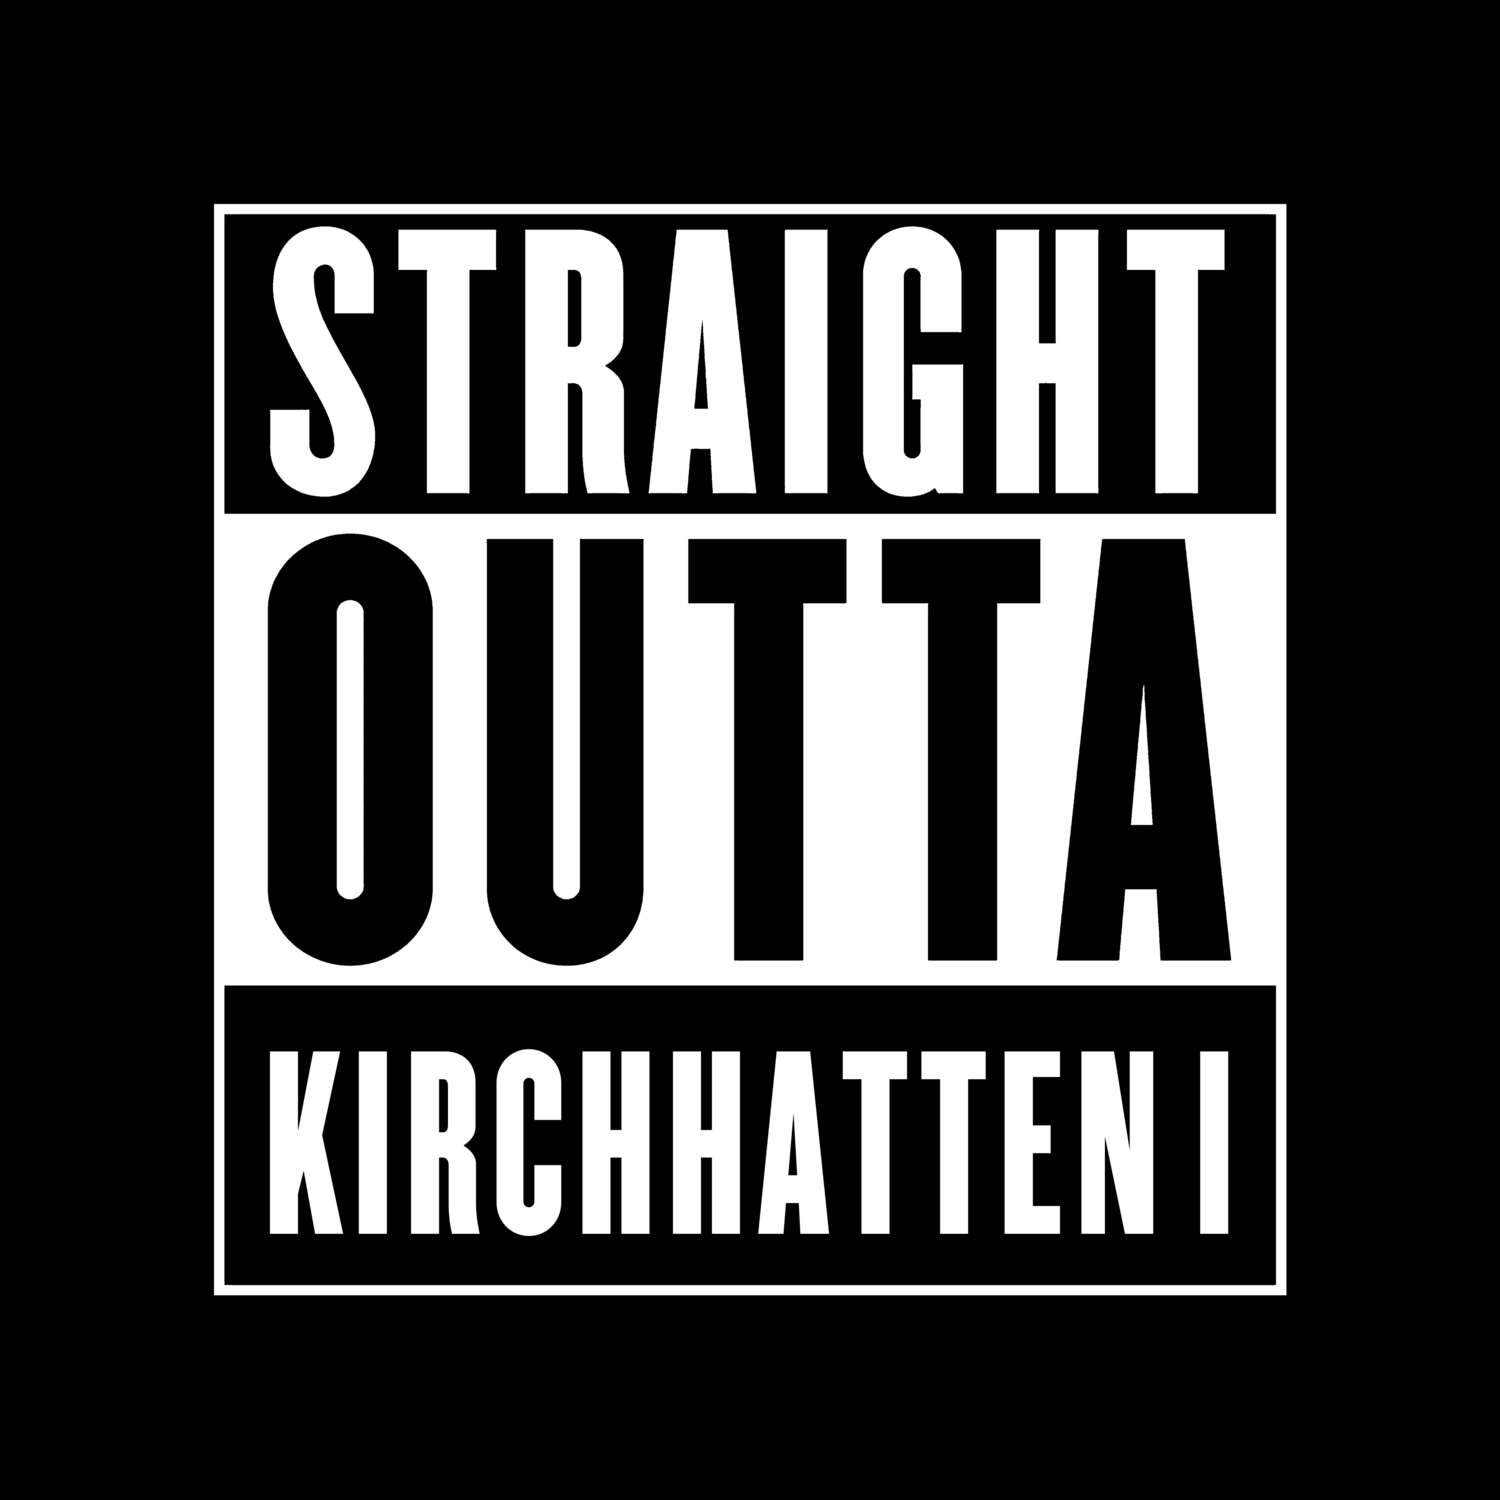 Kirchhatten I T-Shirt »Straight Outta«